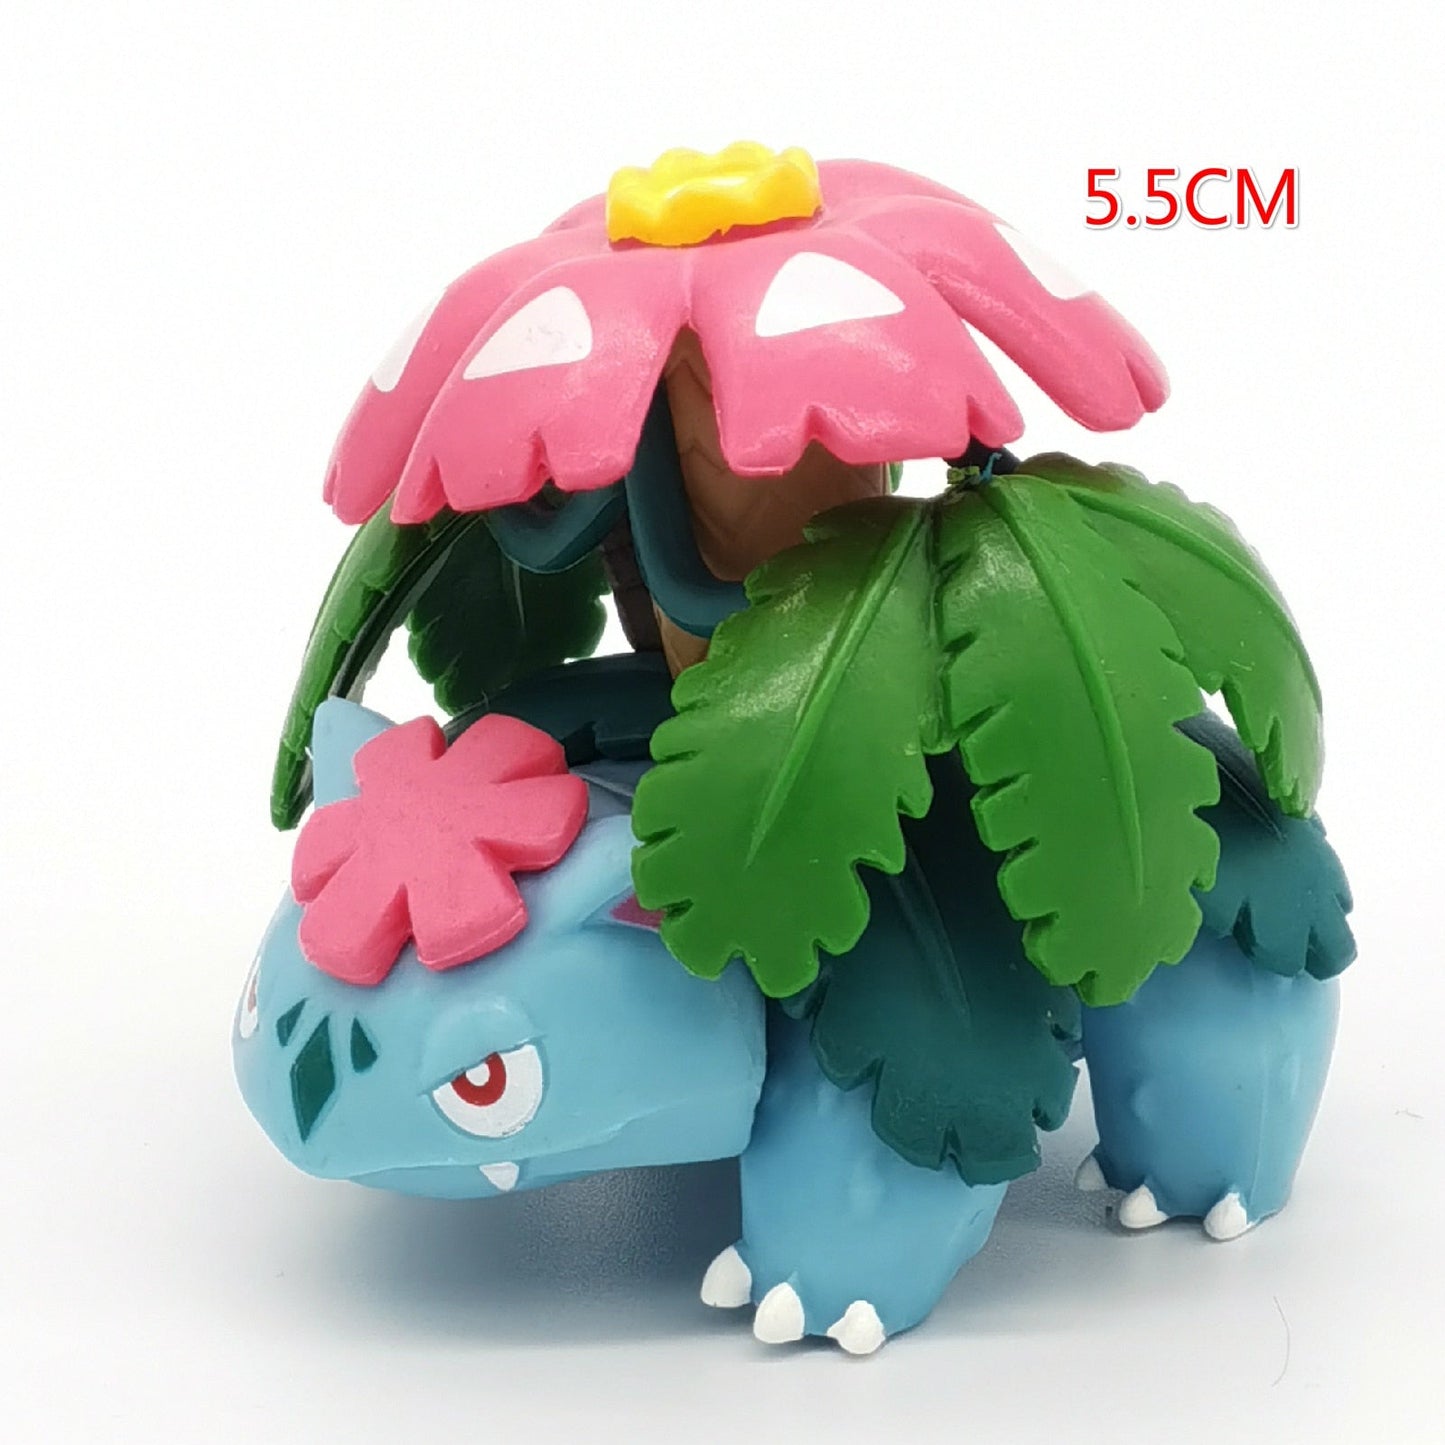 Pokemon Figurines 6-13cm Pokemon (Variants Available) - House Of Fandom